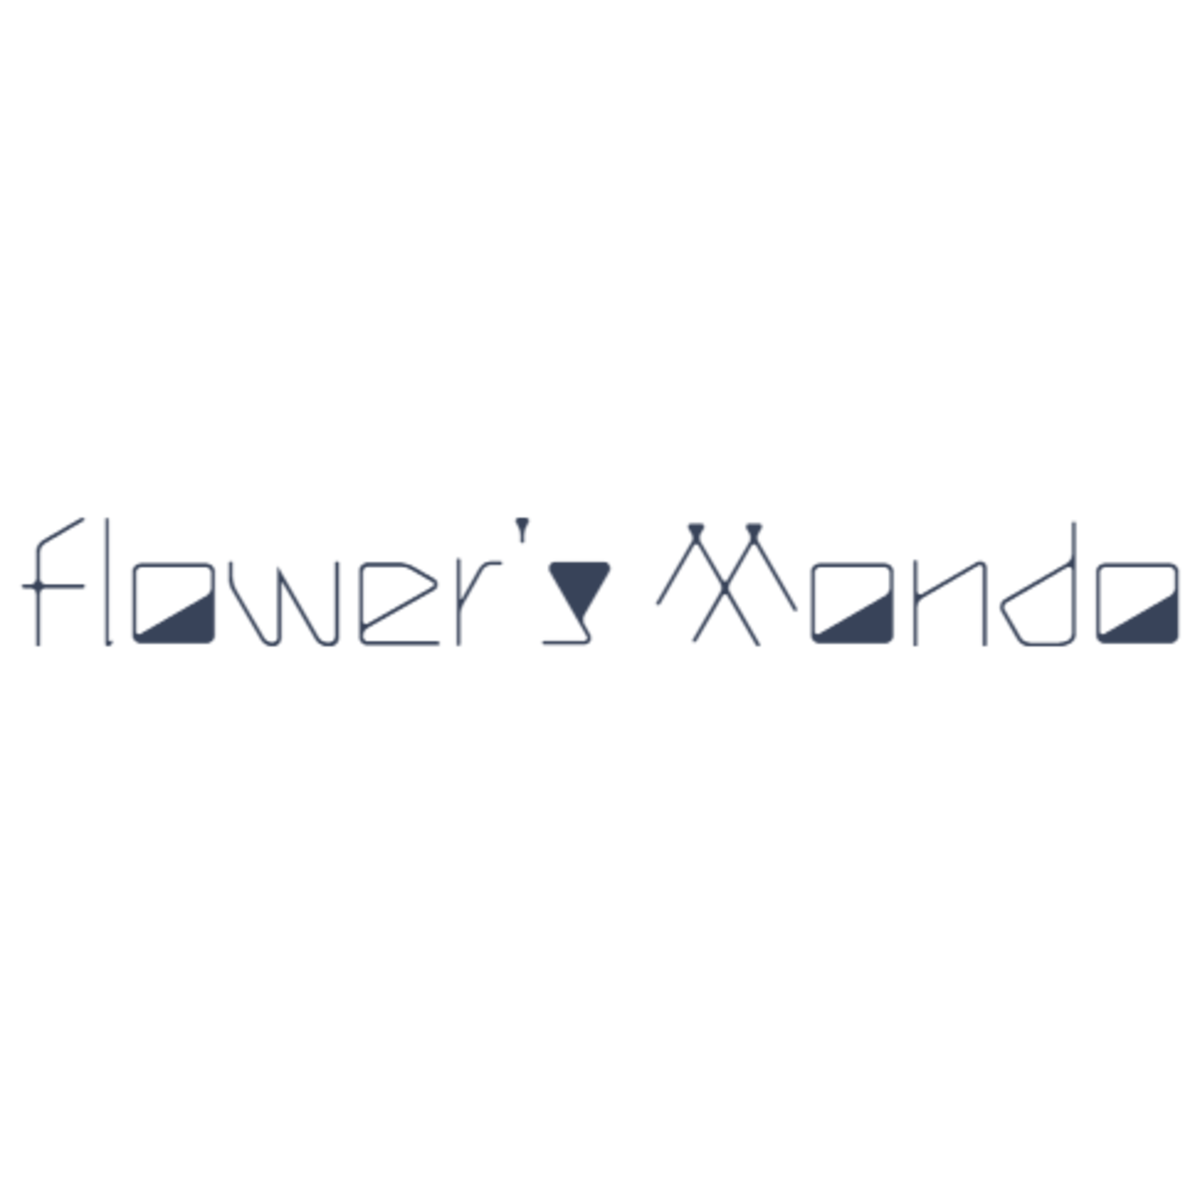 flower'S Mondo  ﾌﾗﾜｰｽﾞﾓﾝﾄﾞ